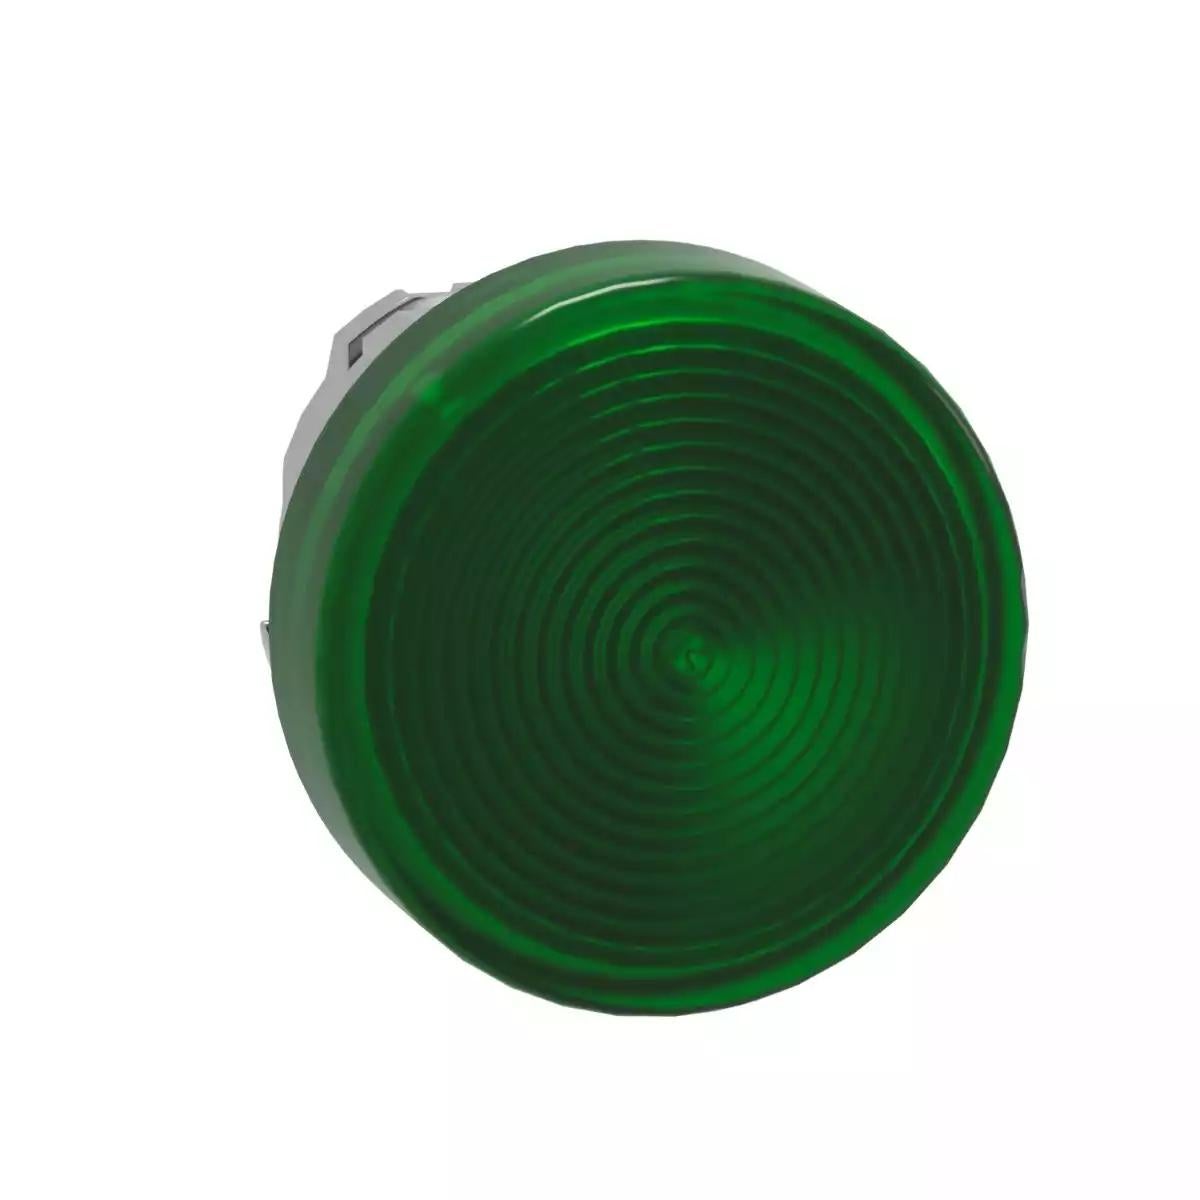 Head for pilot light, Harmony XB4, metal, green, 22mm, universal LED, grooved lens